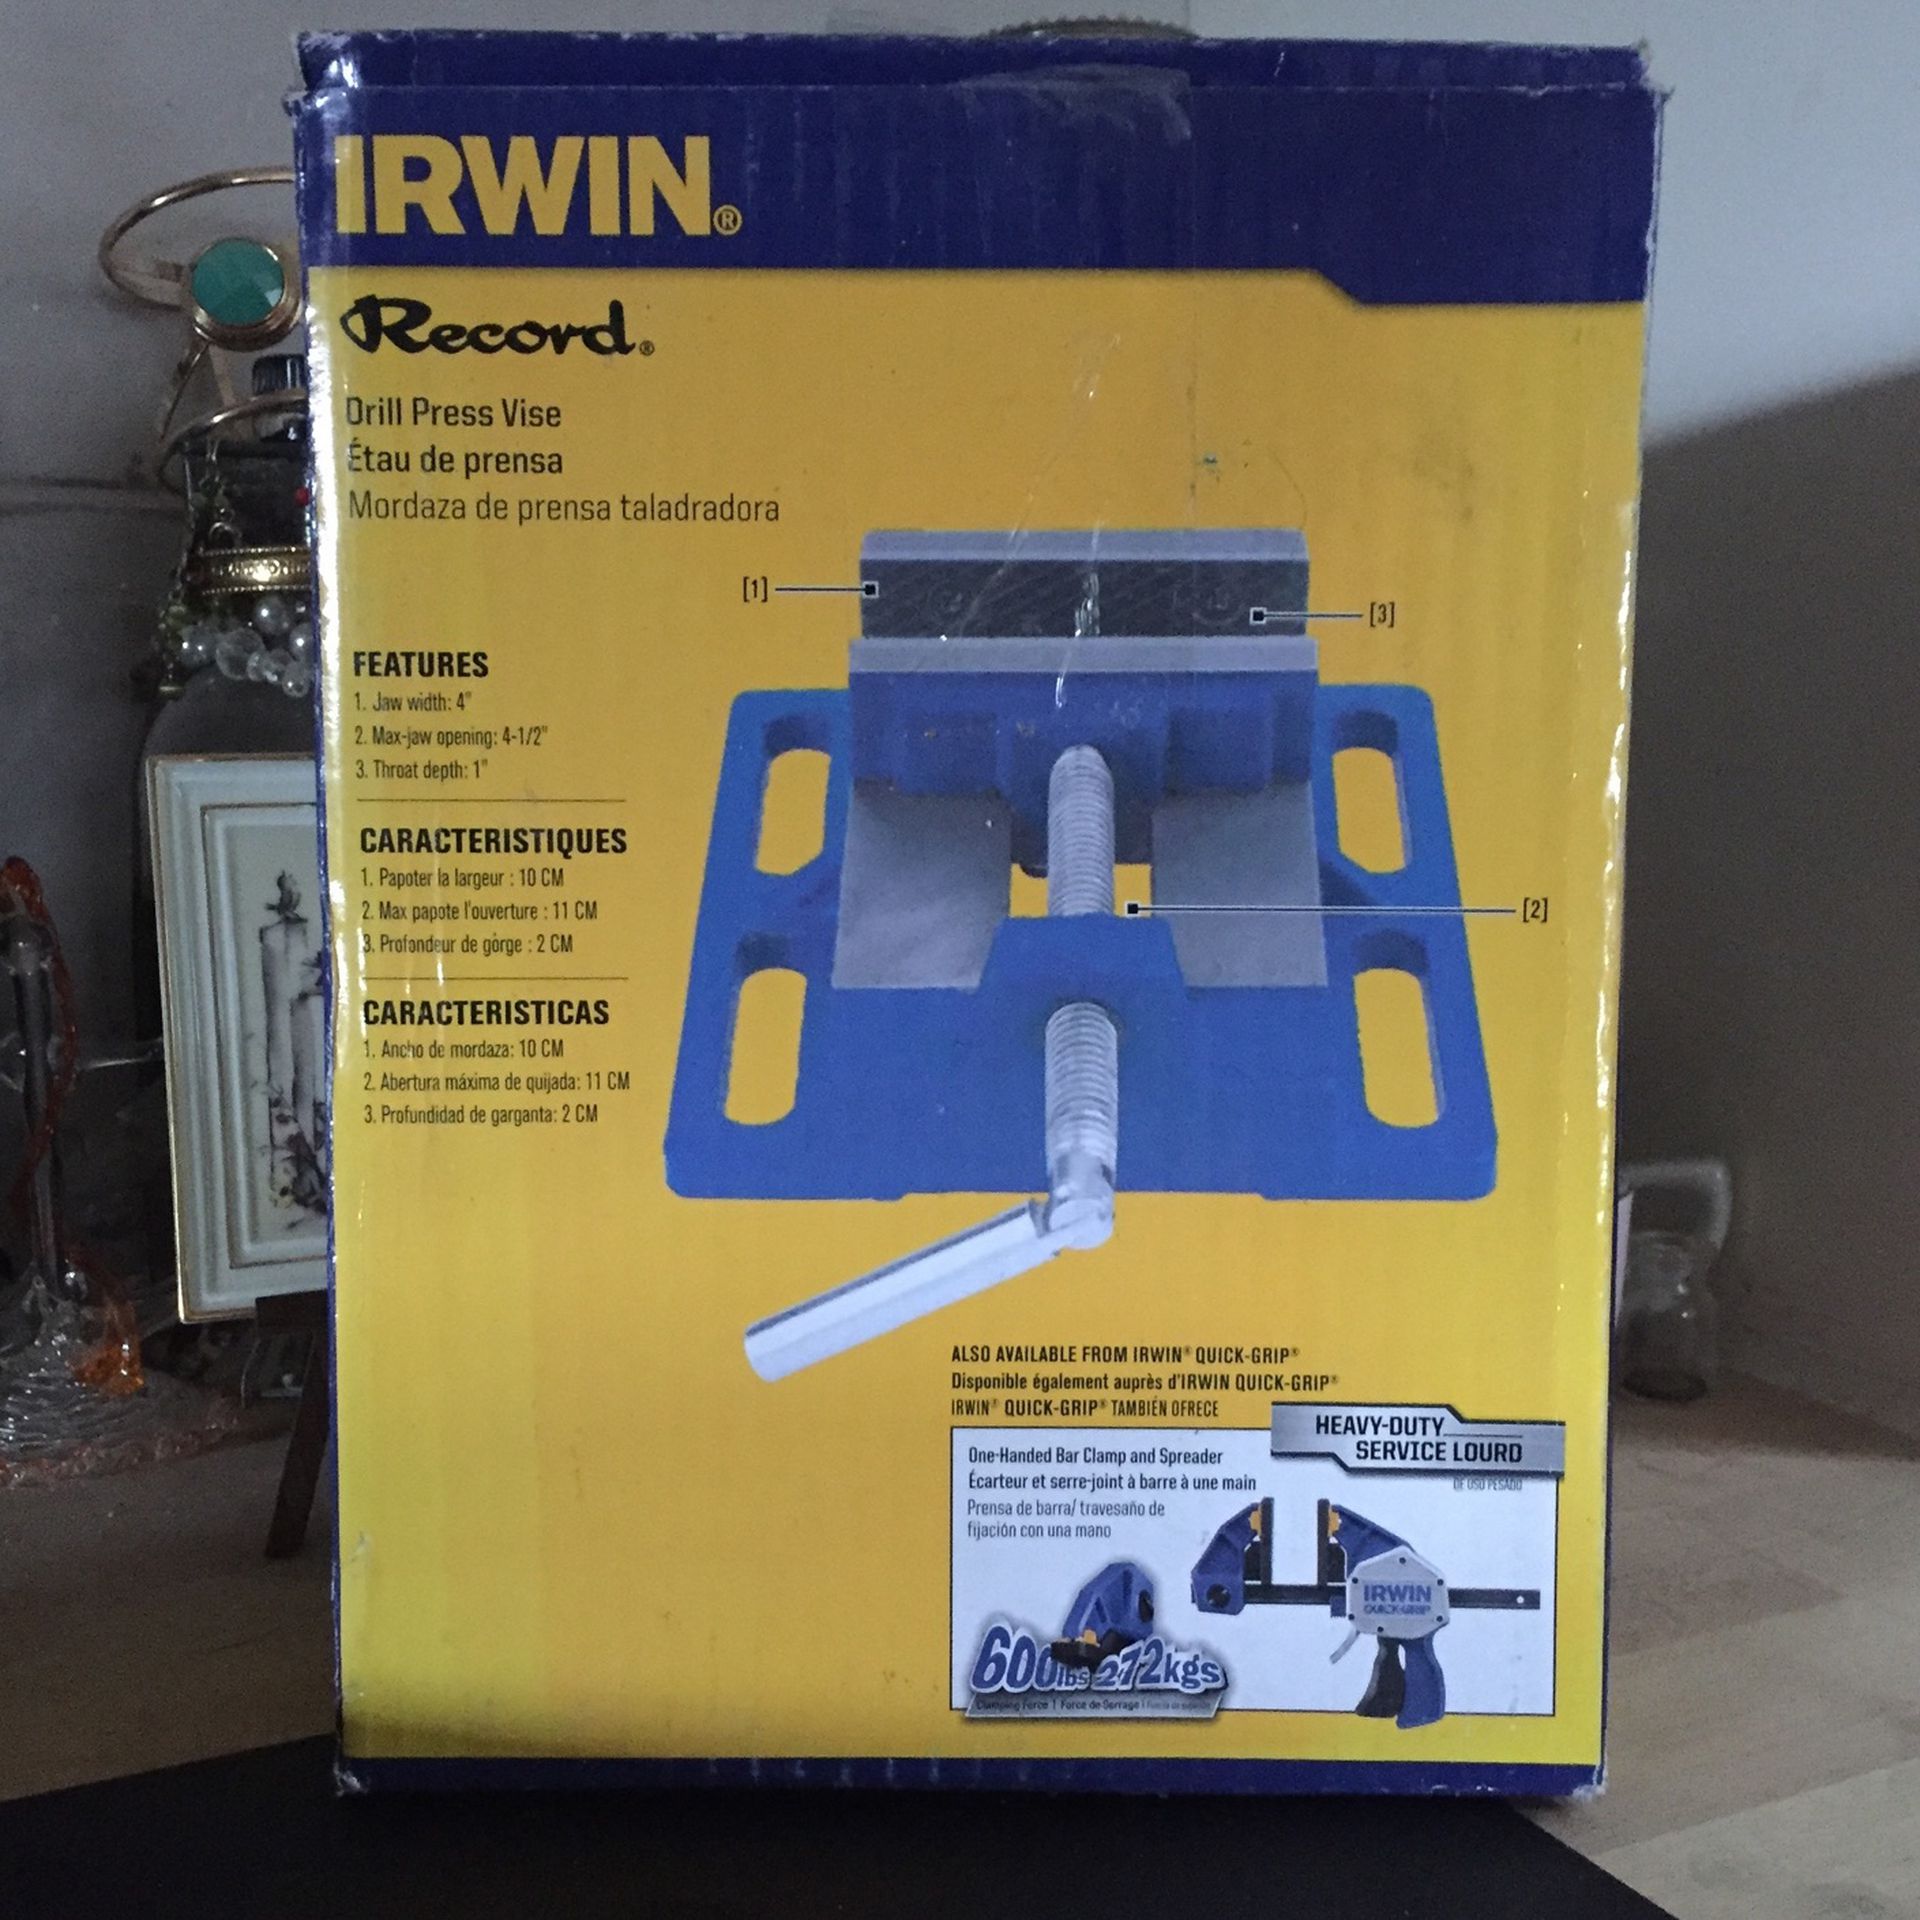 IRWIN 4” Drill Press Vise